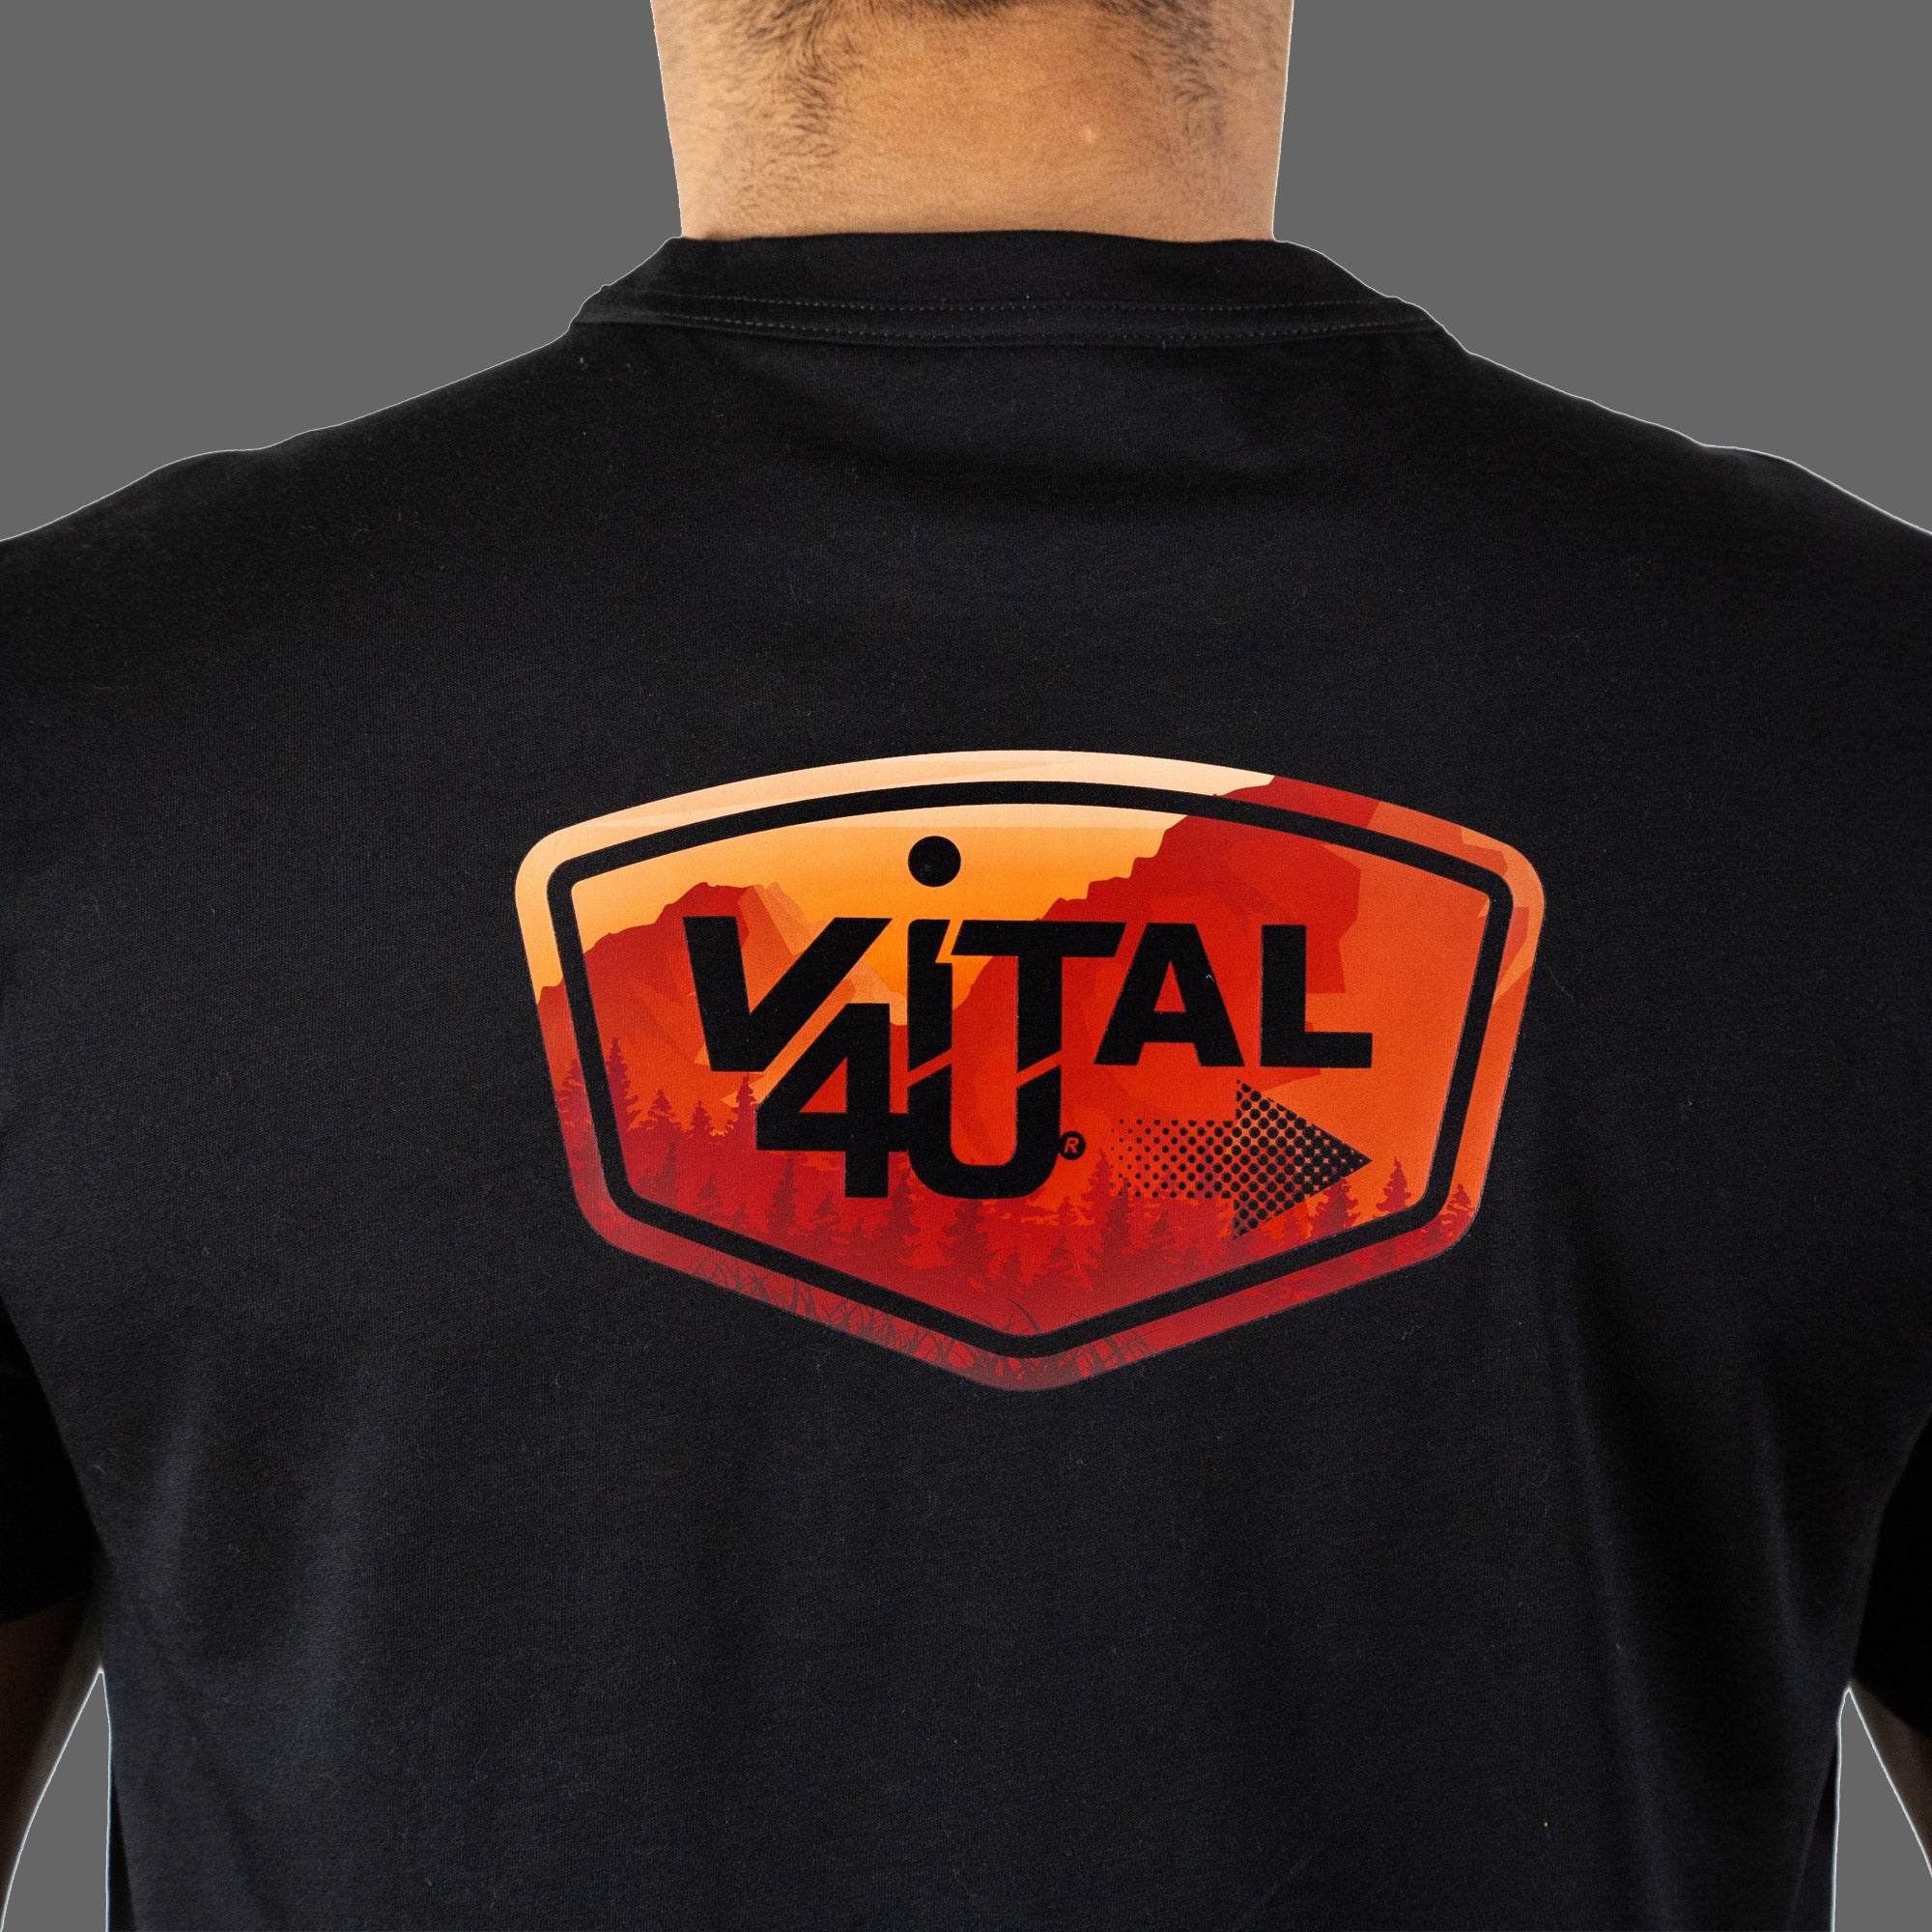 Vital 4U® Signature T-Shirt by NewEra® - Men's